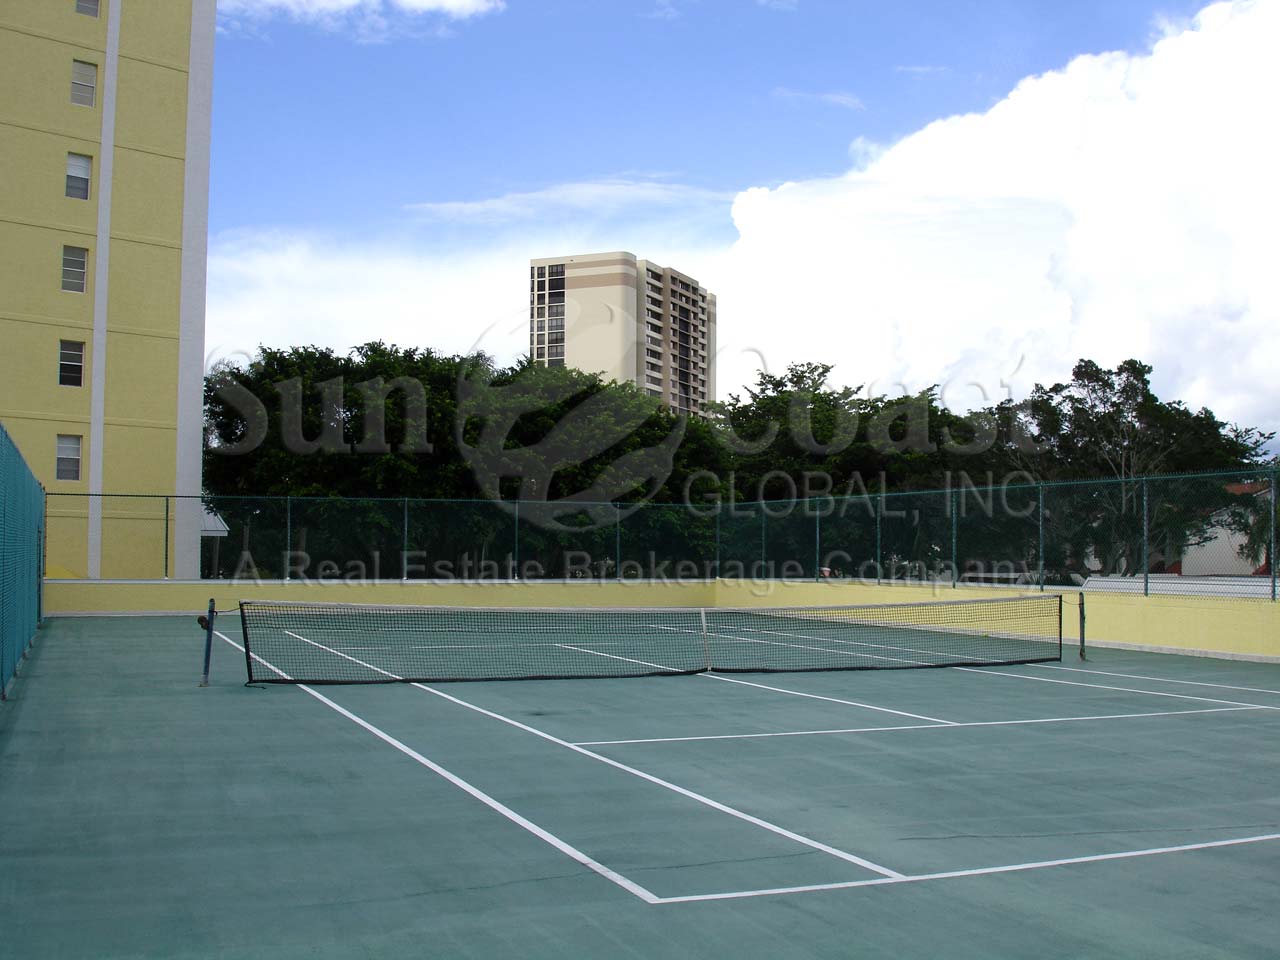 St Tropez Tennis Courts